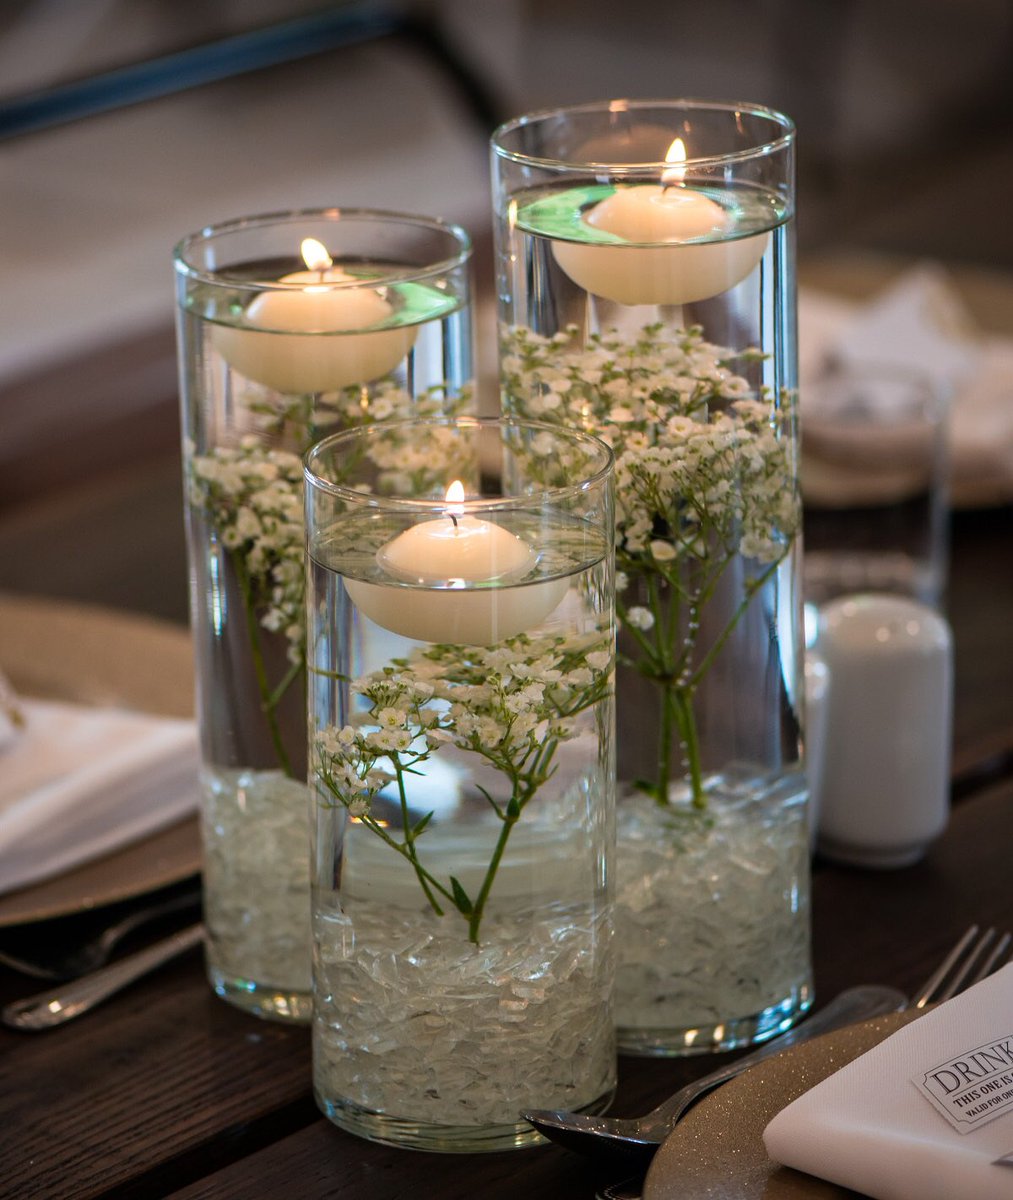 Don't these look great?! The floating candles were featured on guest tables at a wedding last year.
 #weddingtabledecor #devonweddingvenue #weddingbarn